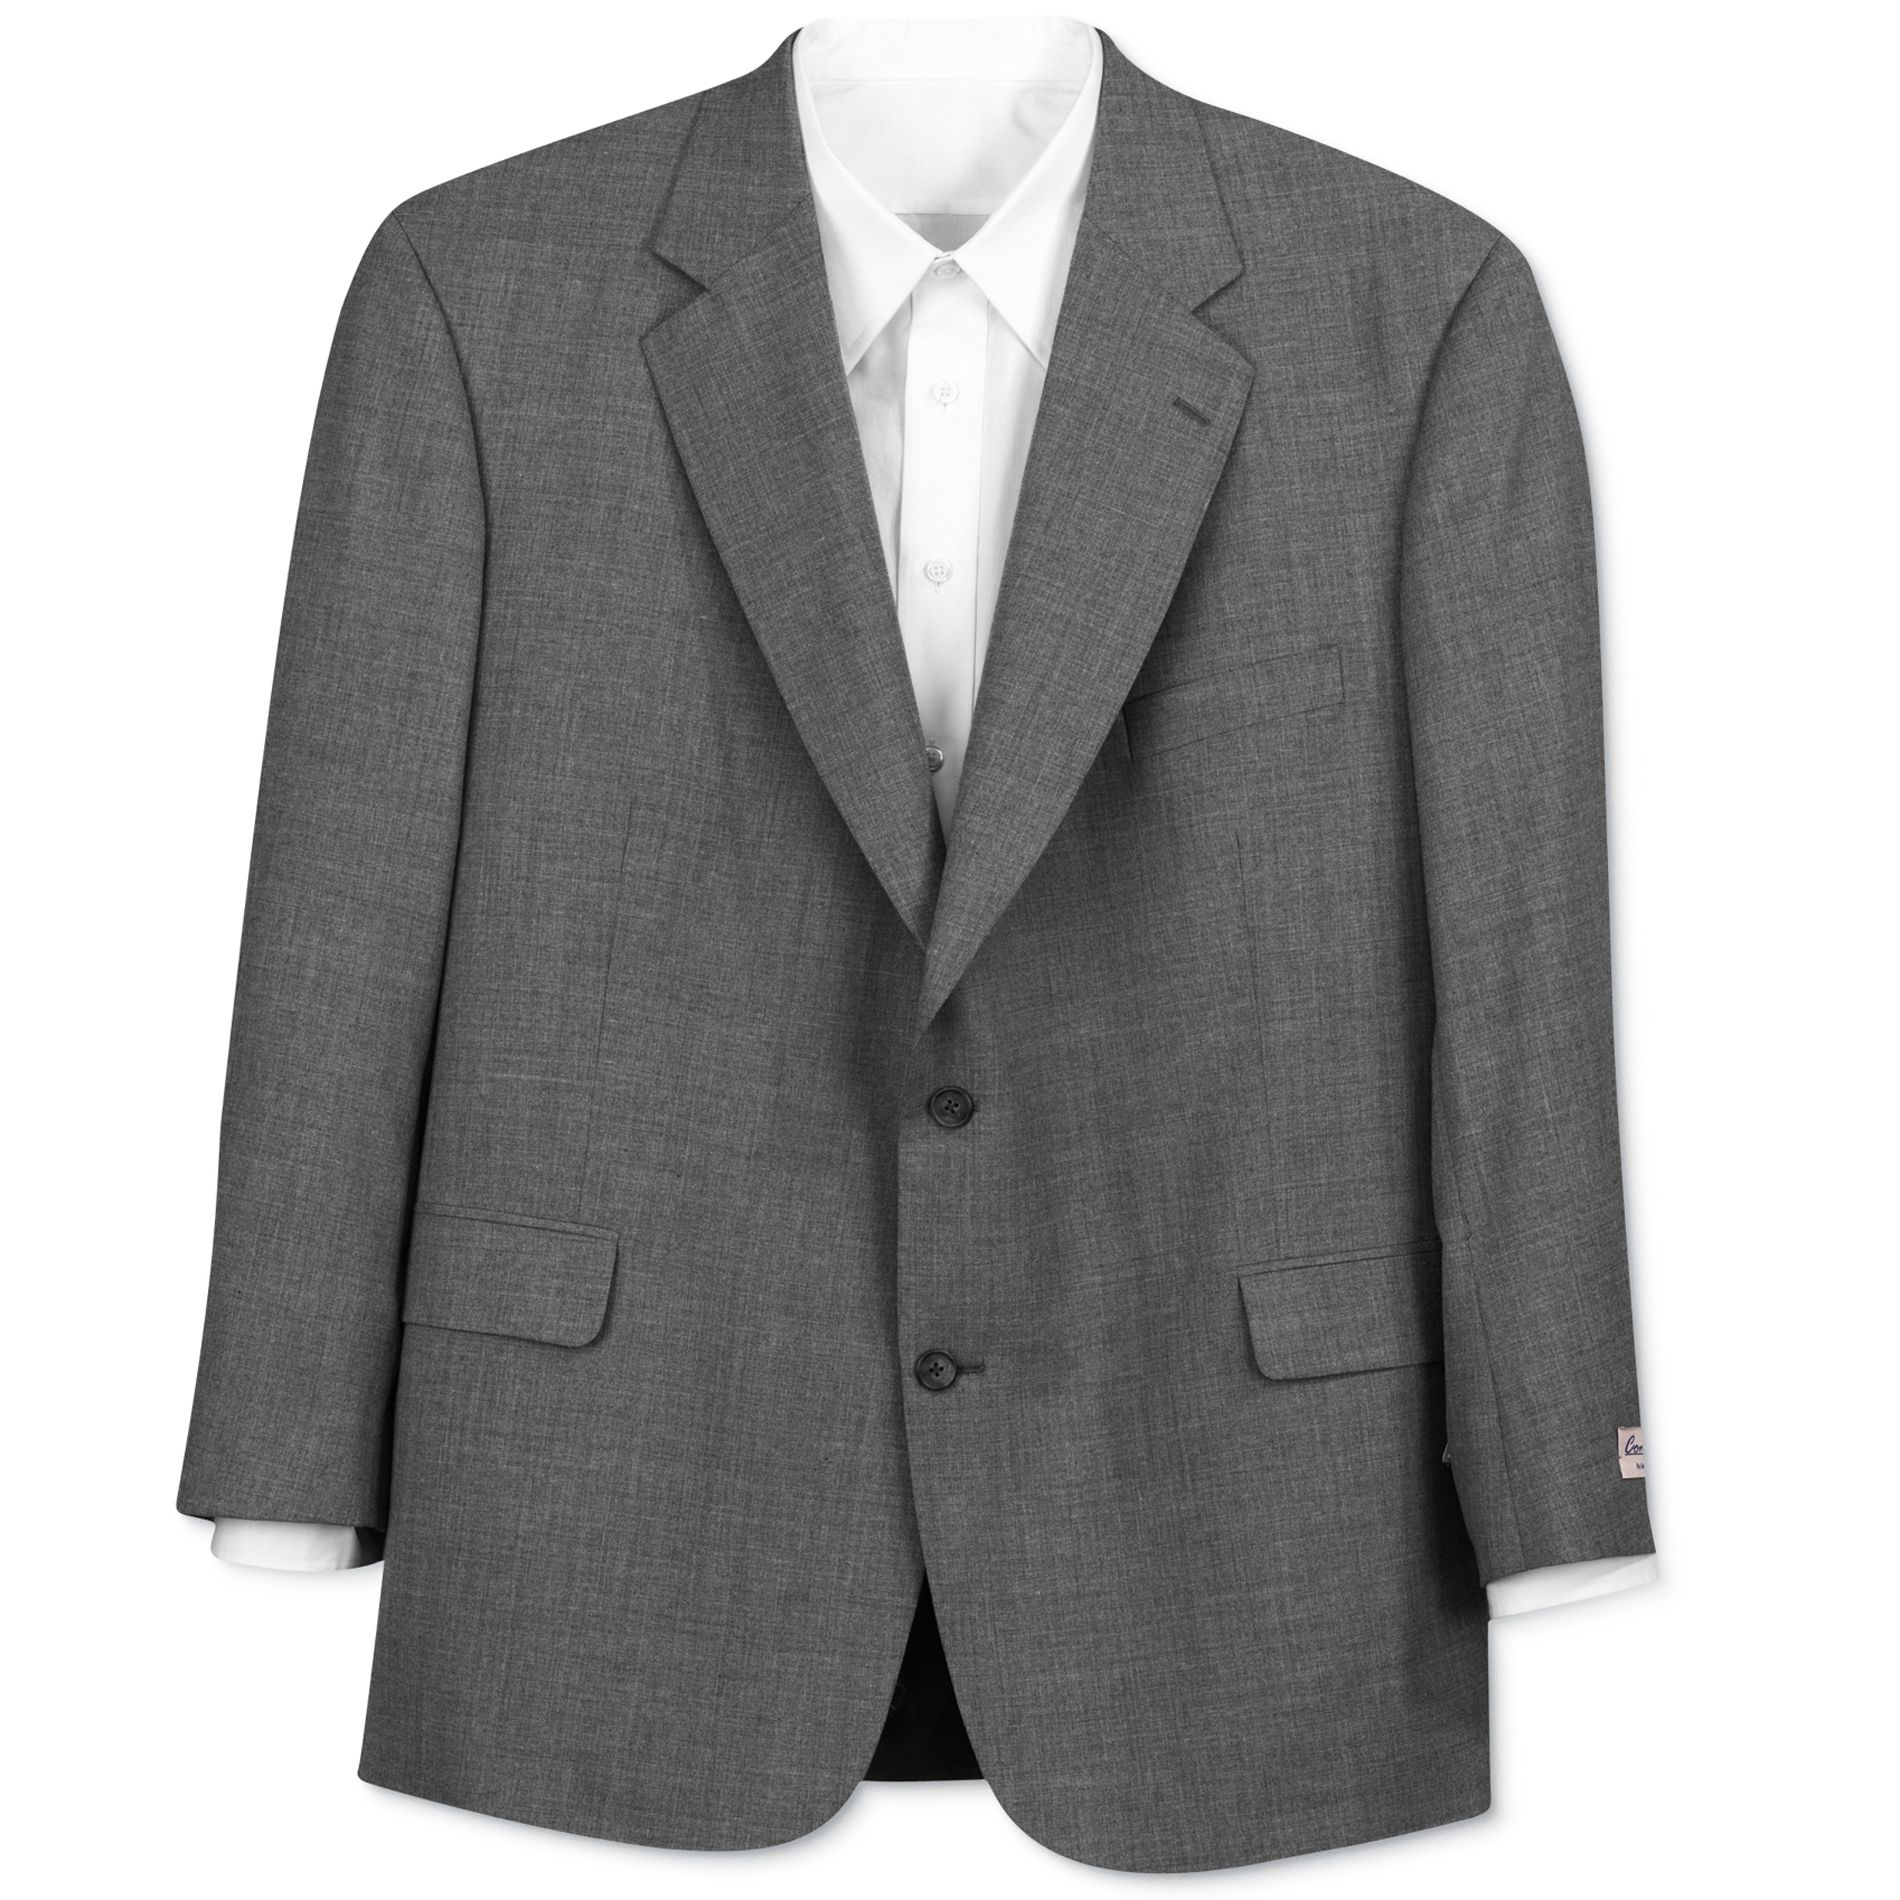 George Foreman Suit Separate Coat